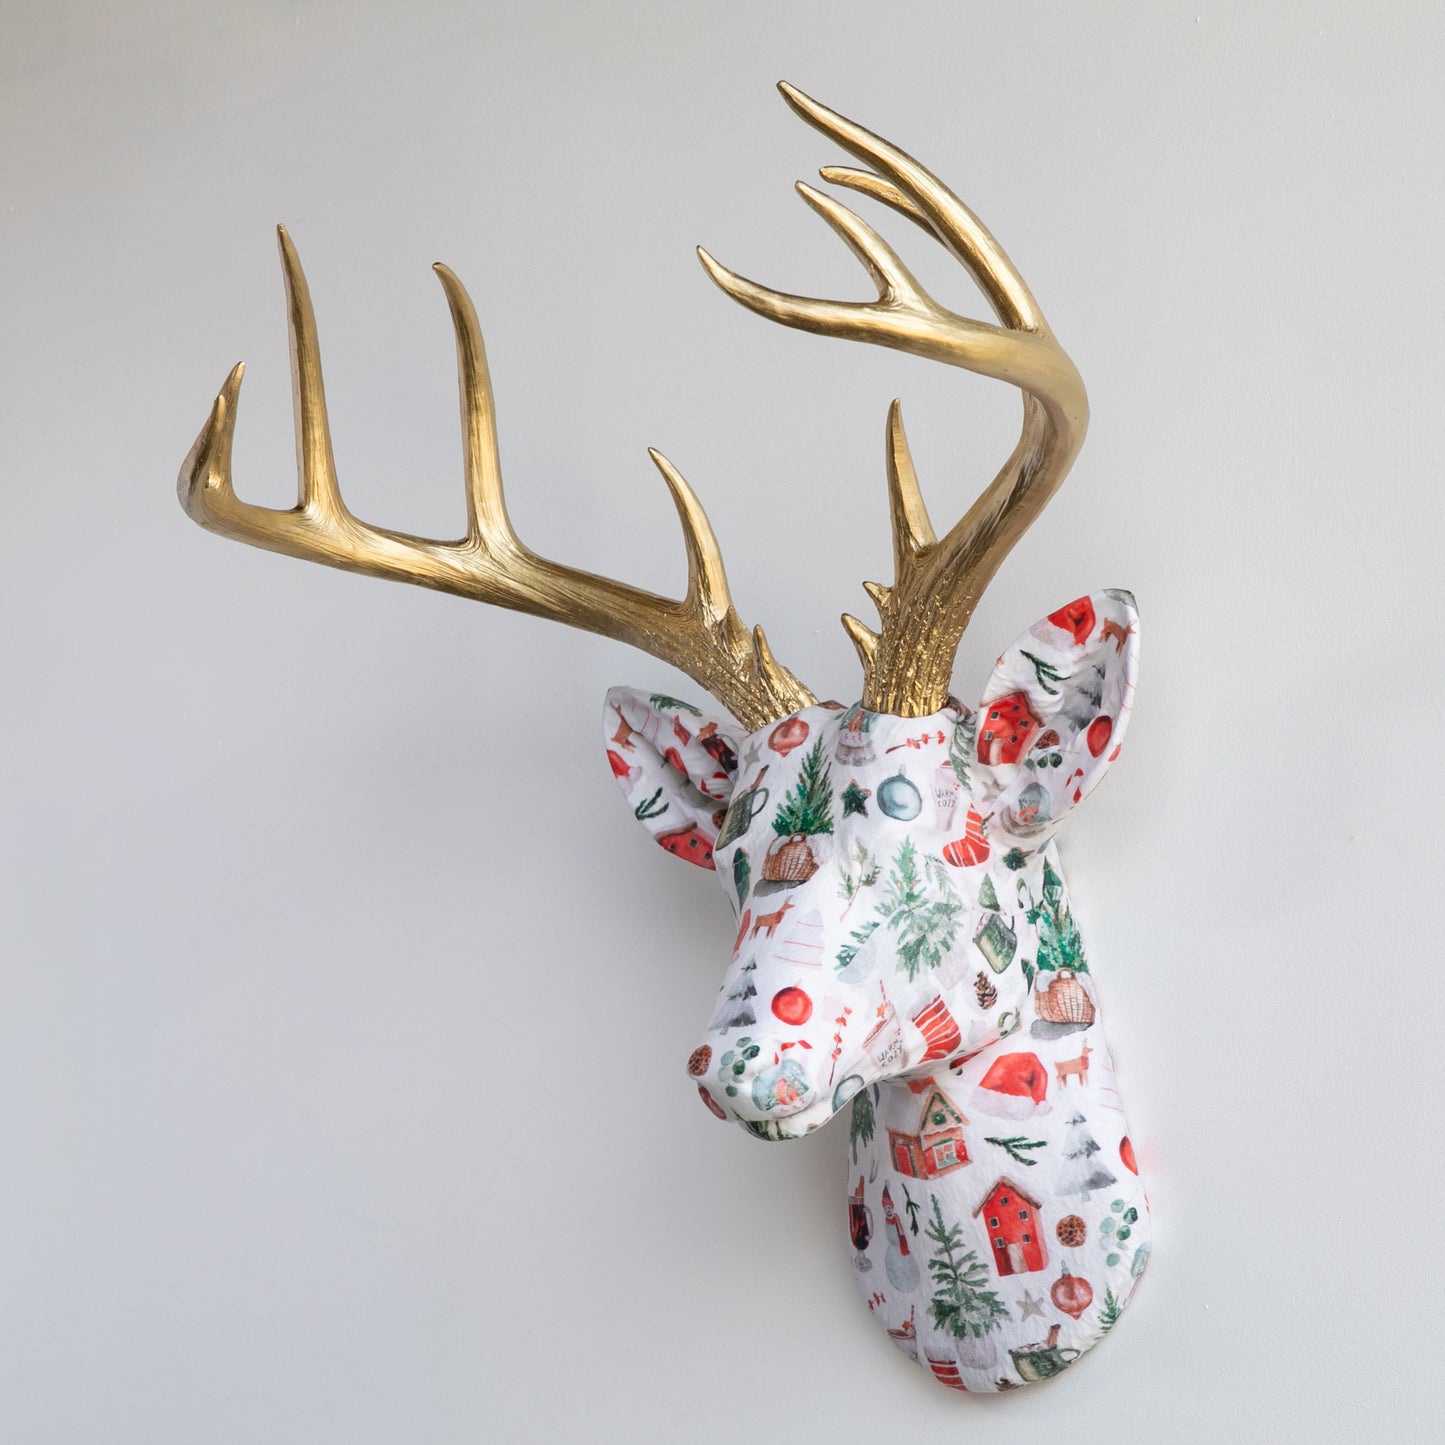 Fabric Deer Head - Cozy Christmas Fabric Deer Head